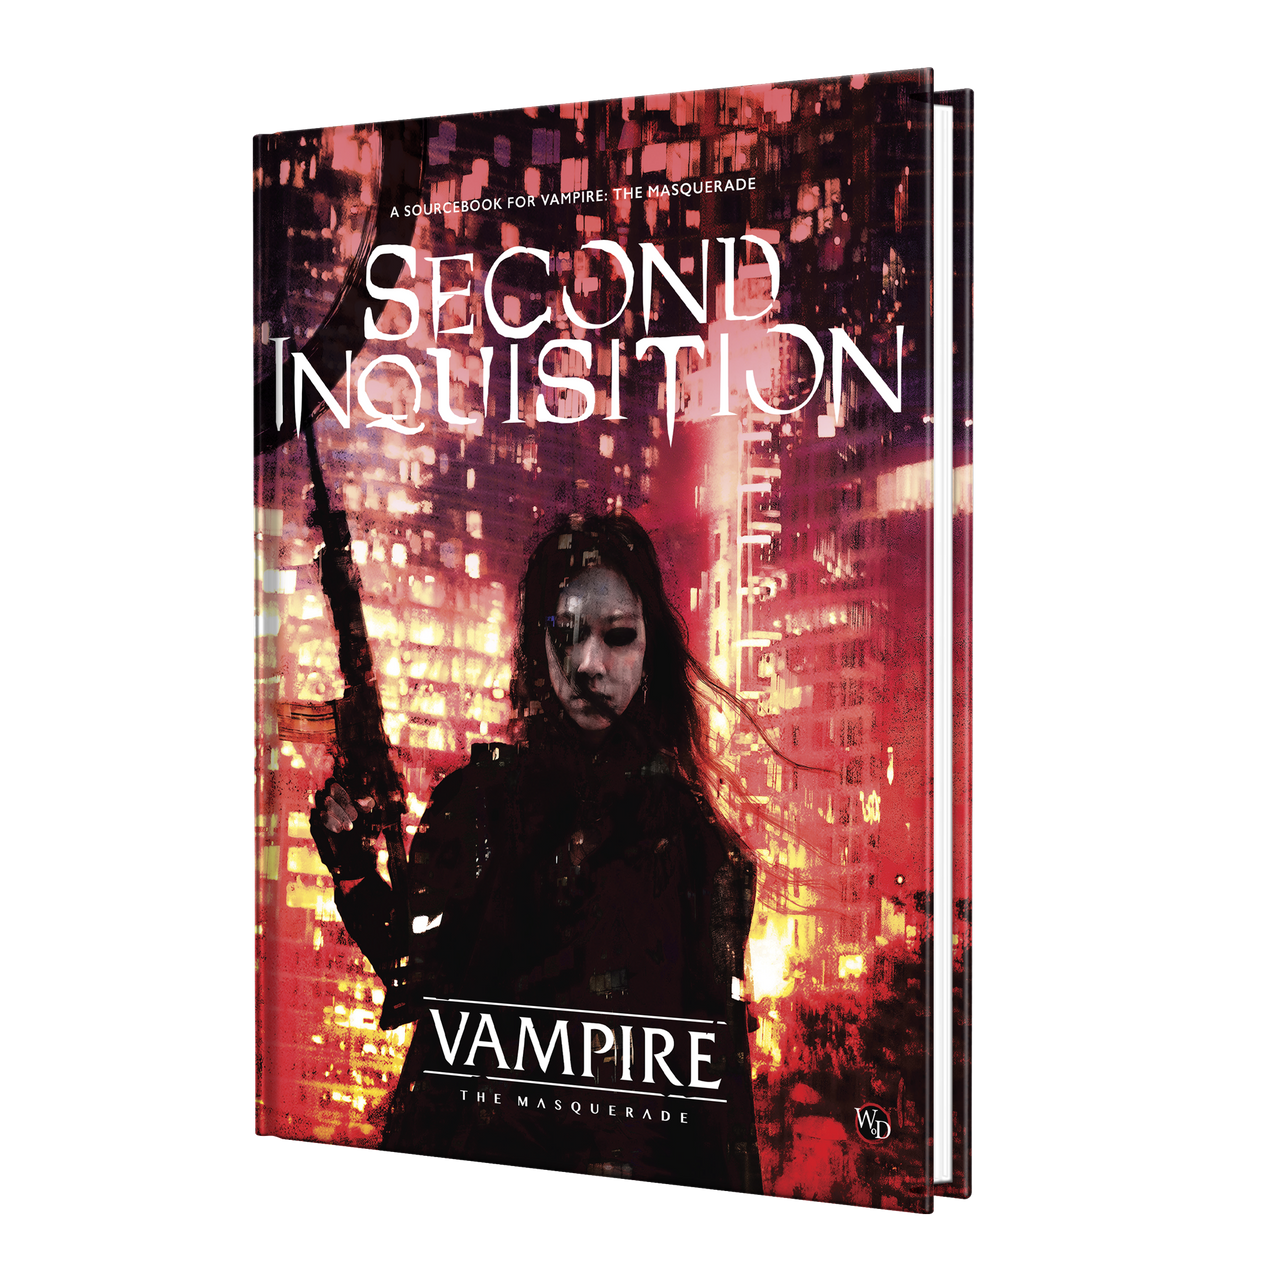 Vampire: The Masquerade 5th Edition RPG Second Inquisition